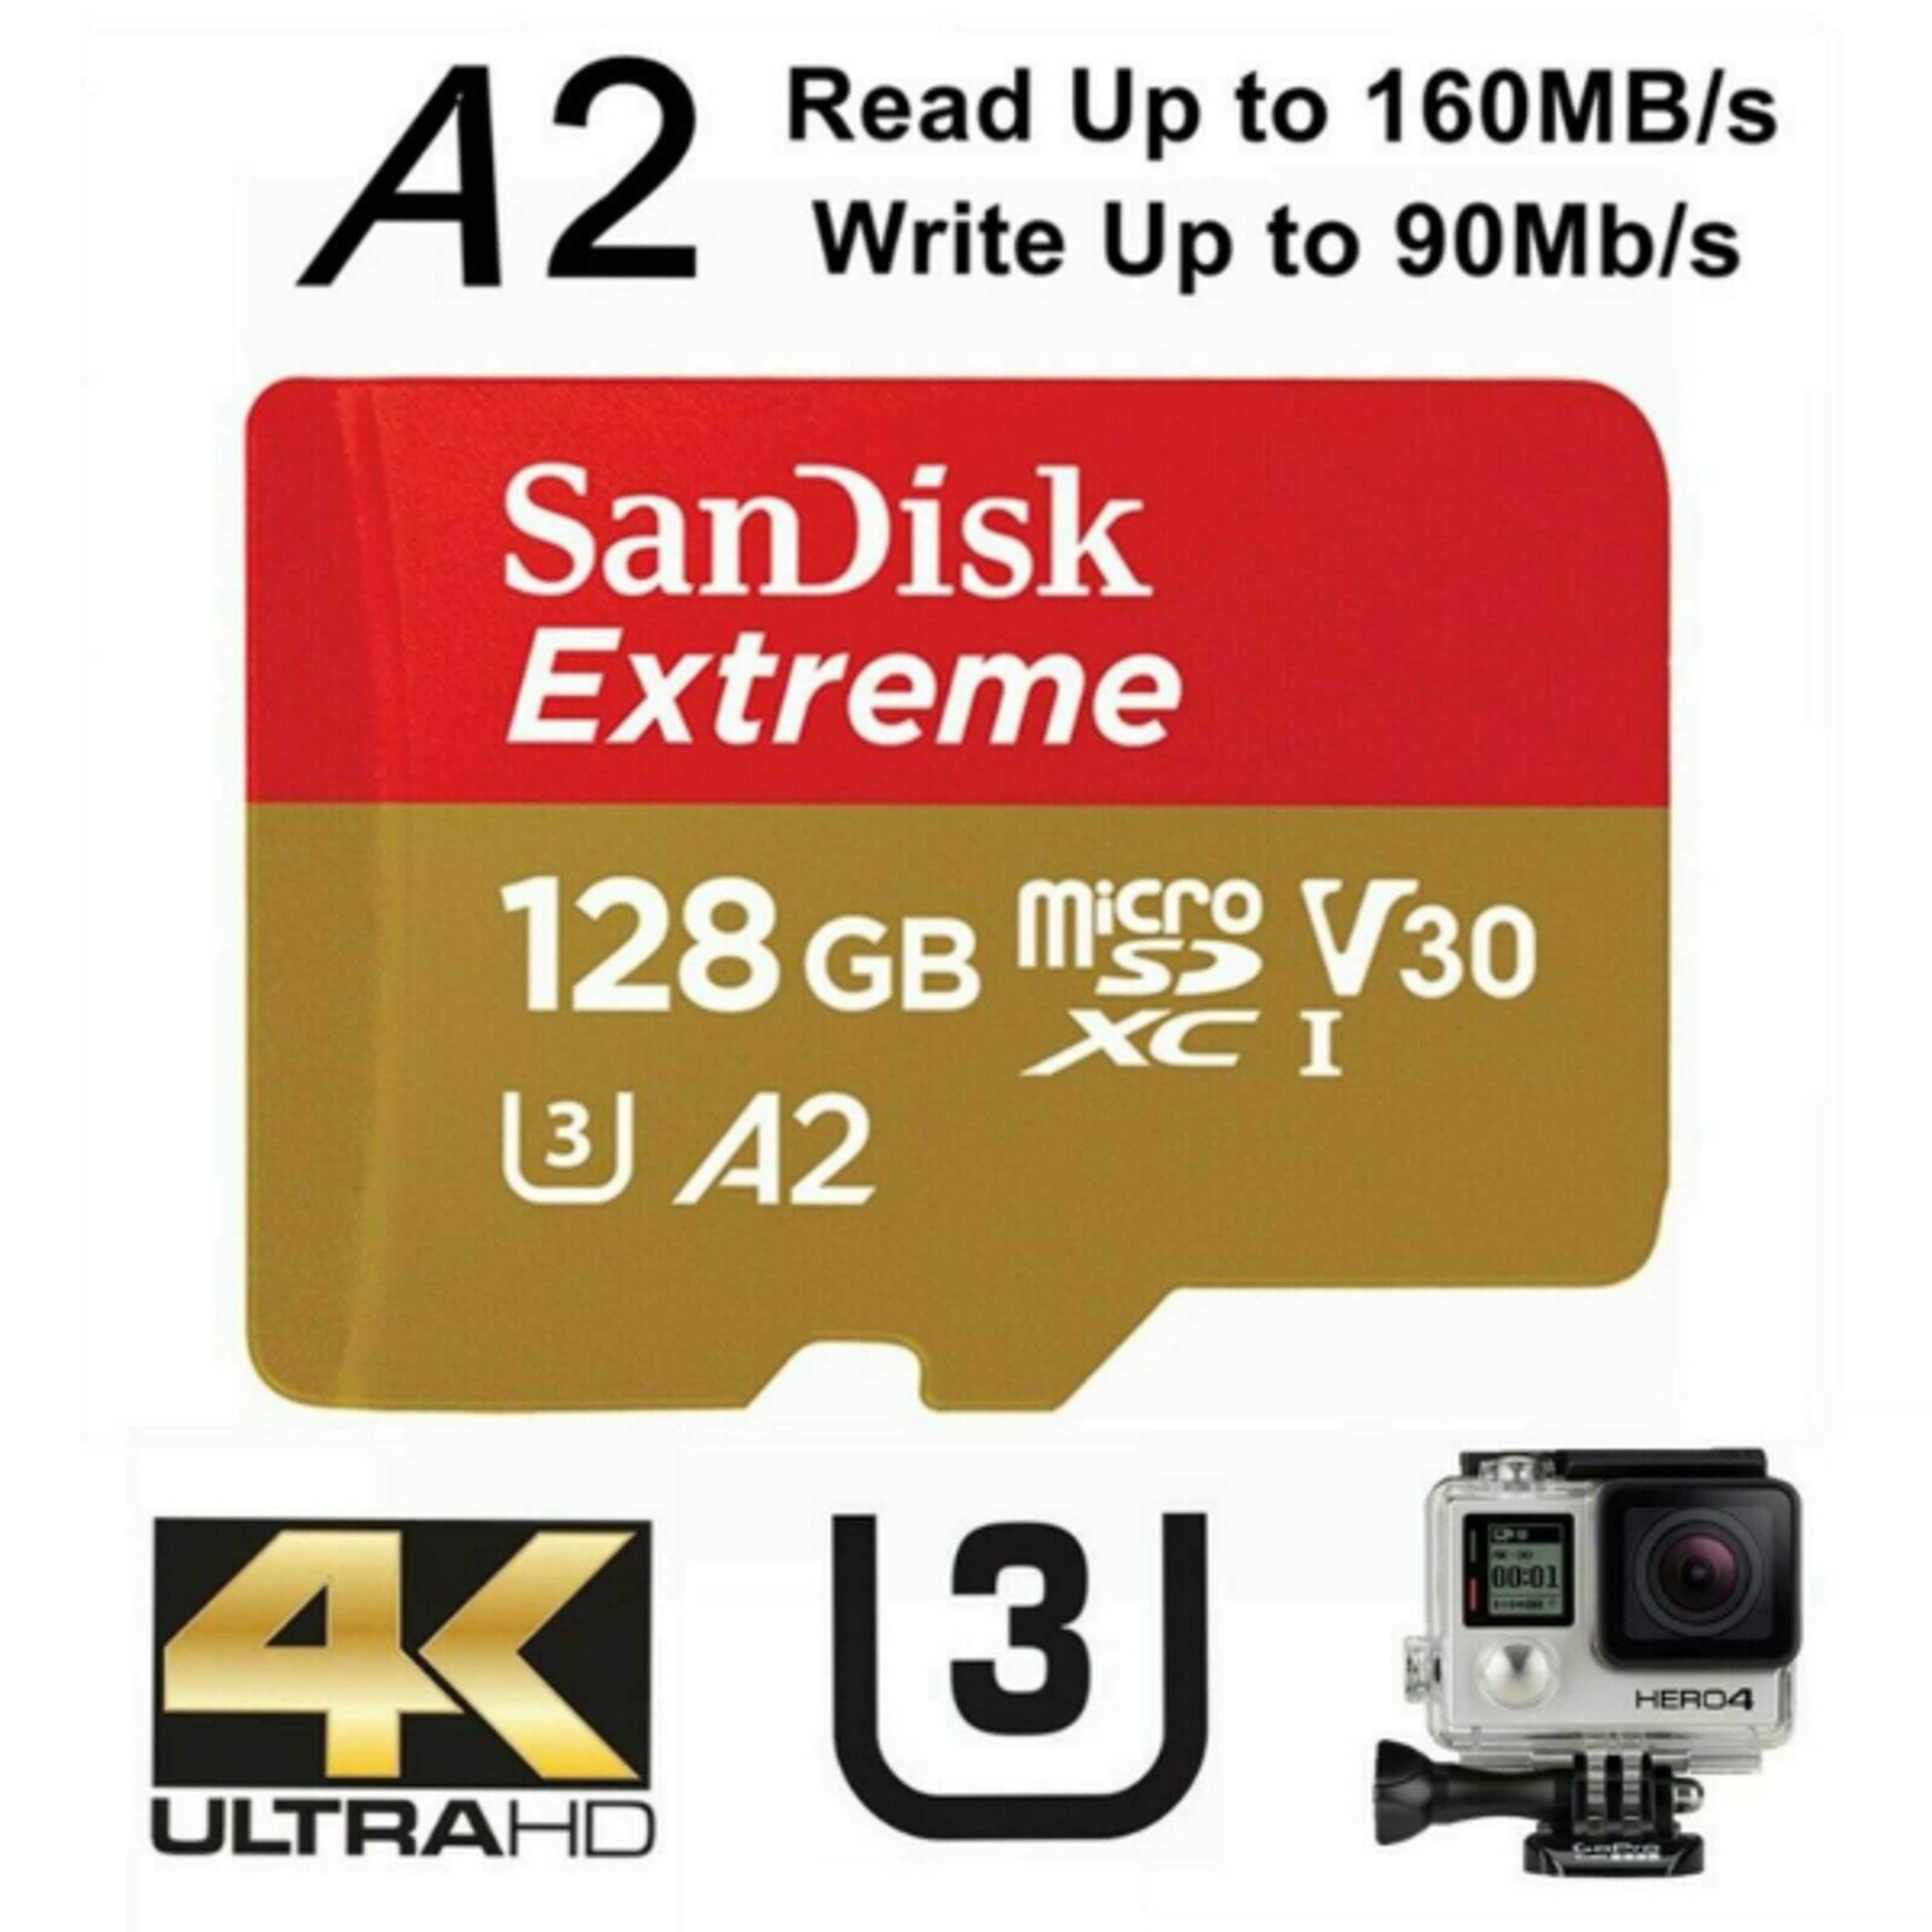 SanDisk Extreme A2 128GB MicroSD CardOfficial Warranty